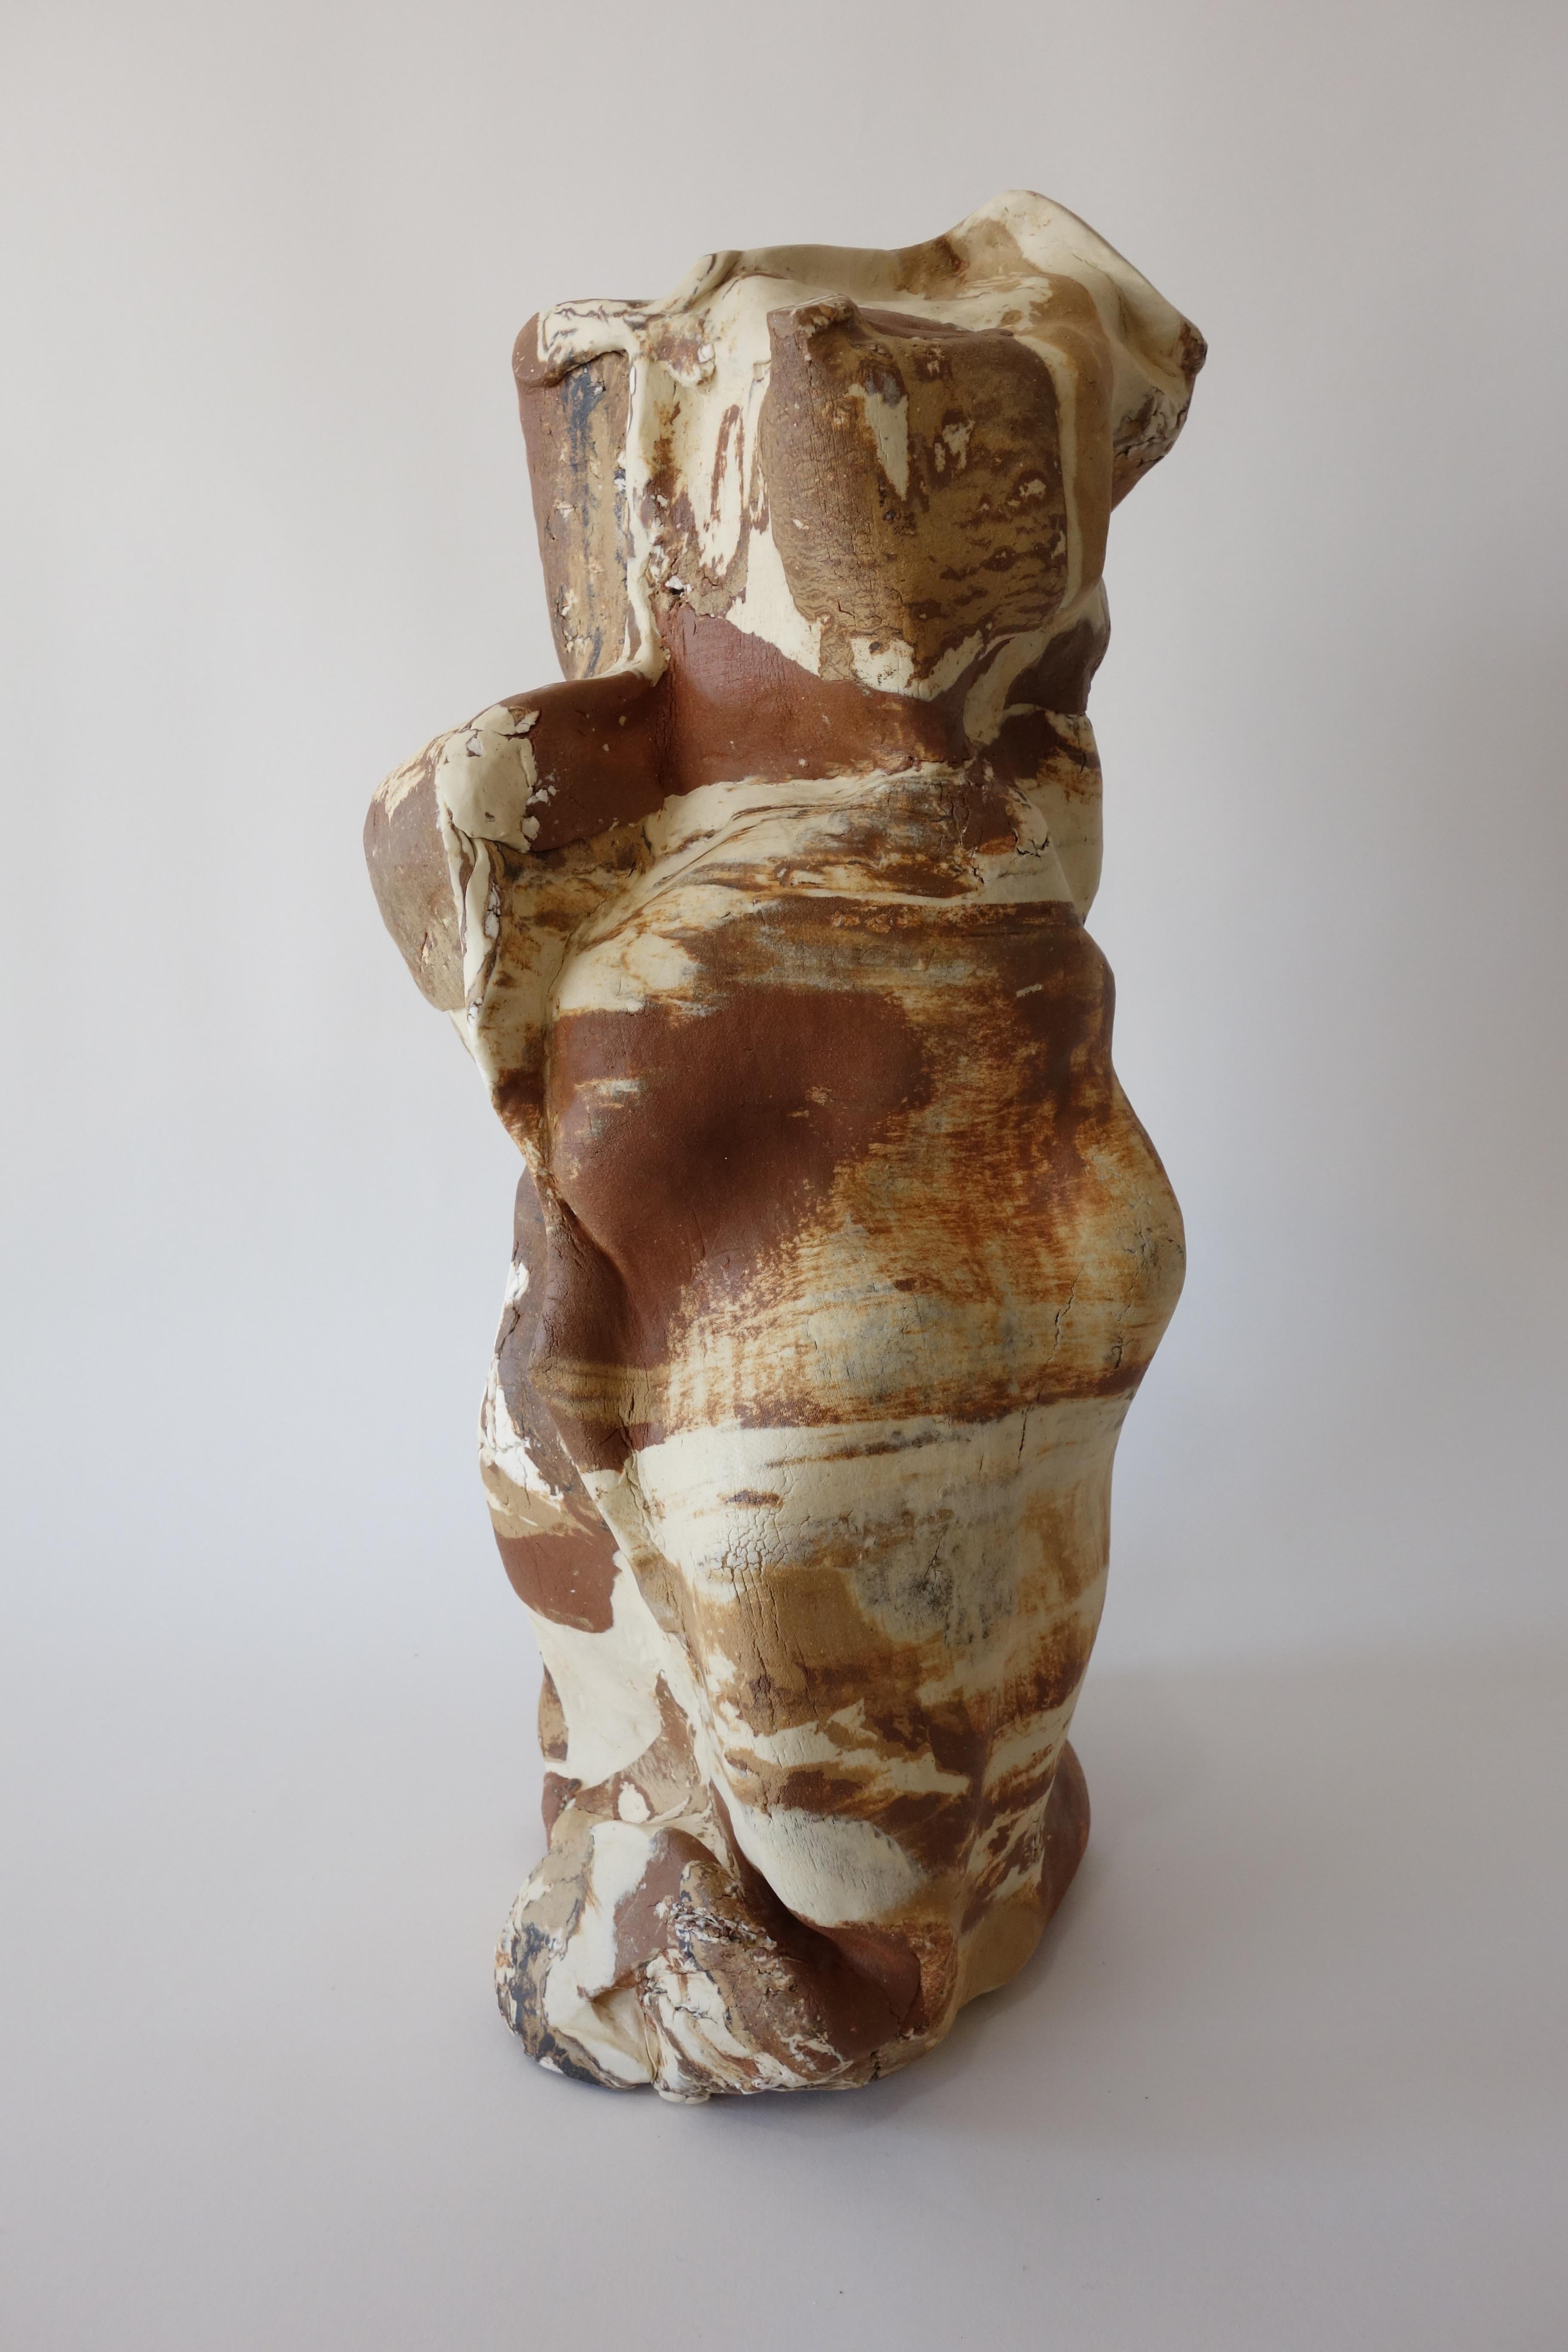 NOR Umarmung – Sculpture von Anna Bush Crews